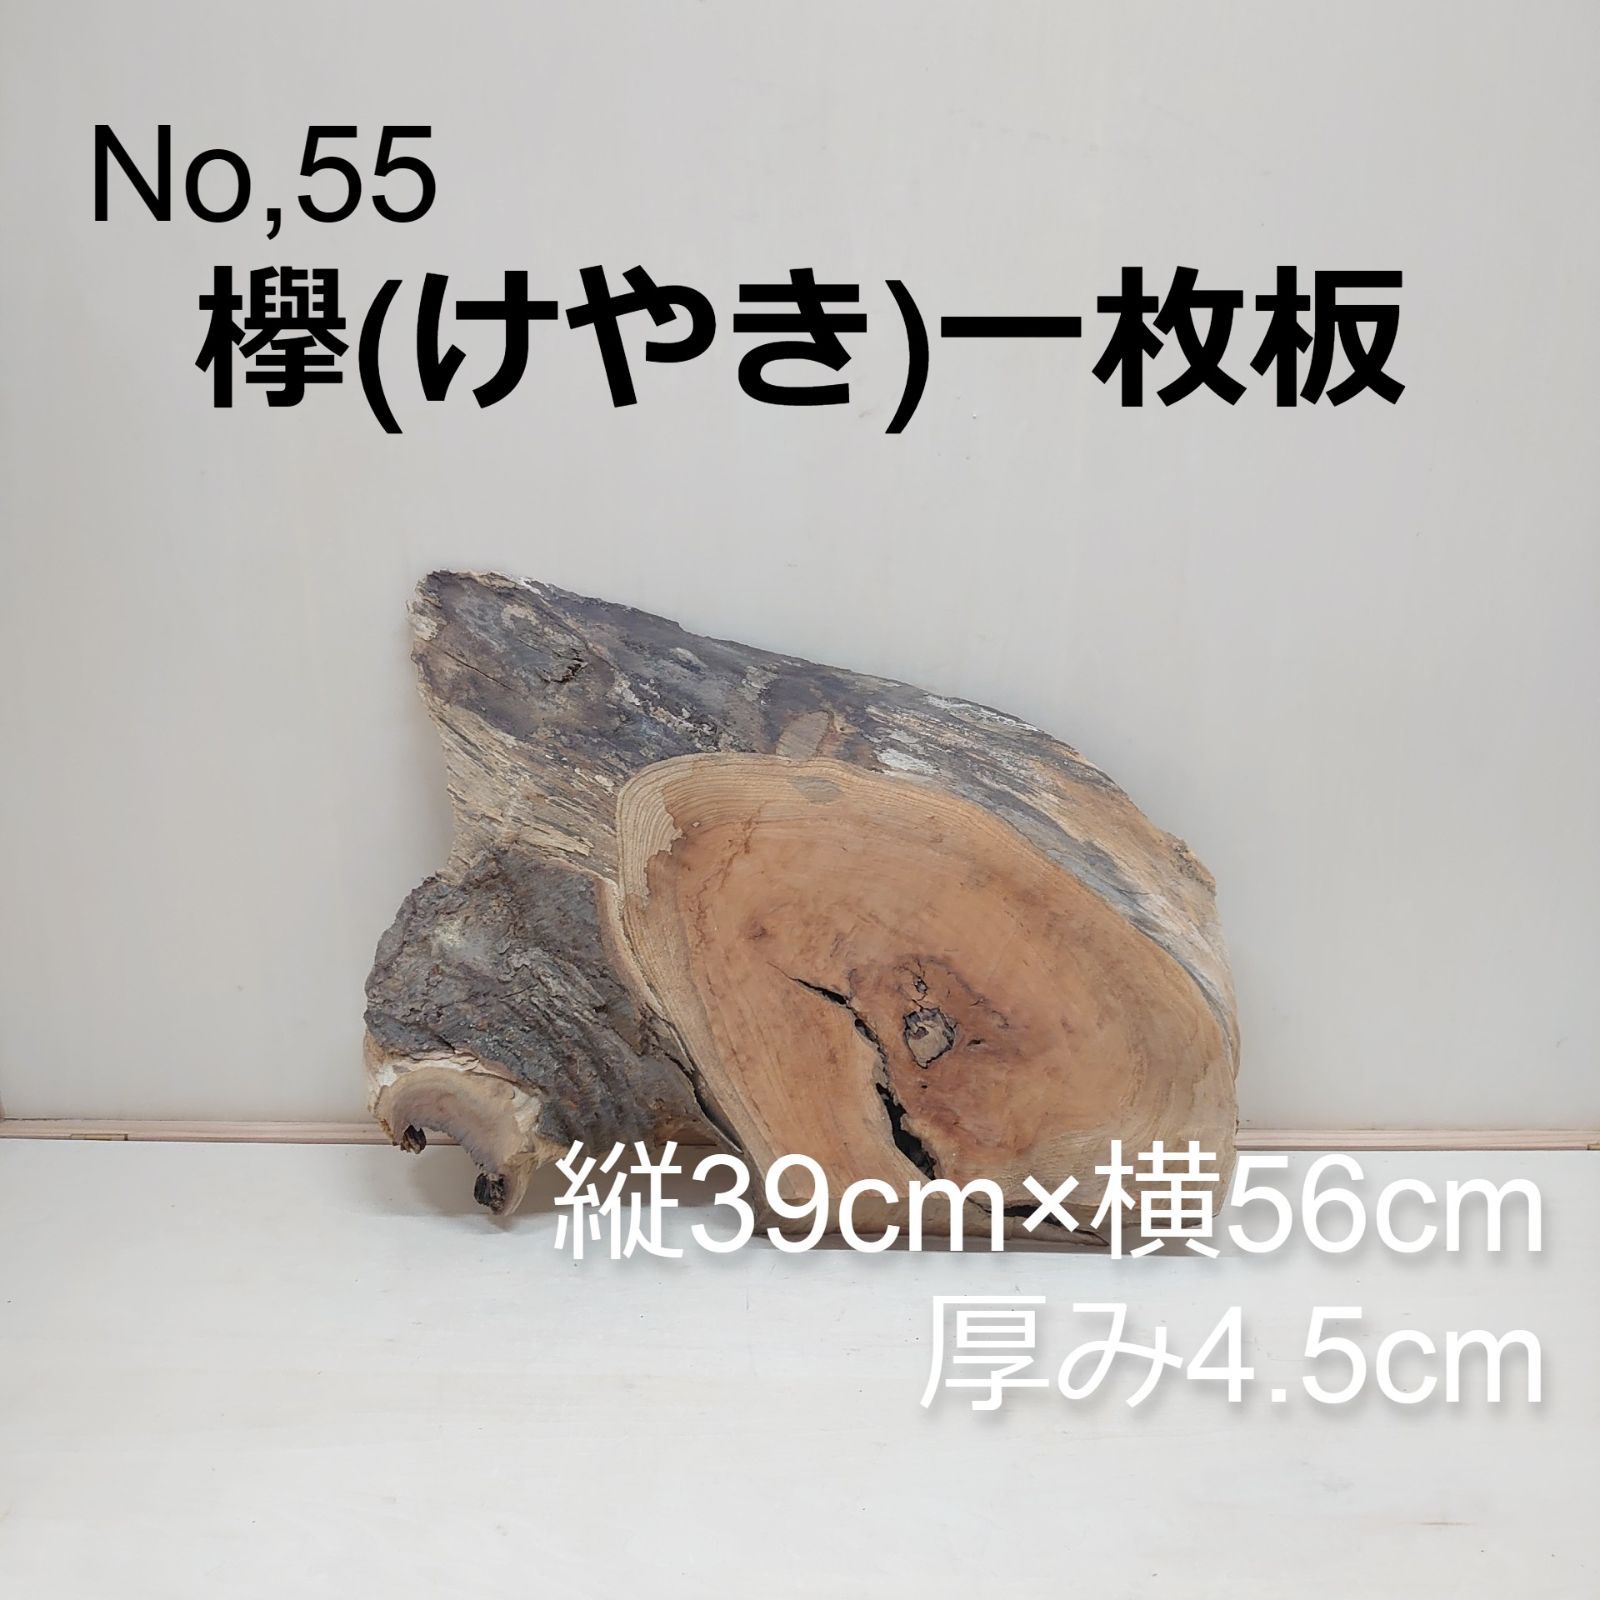 No.55 欅（けやき）一枚板、 花台、看板、インテリア、DIY材料 - 松本